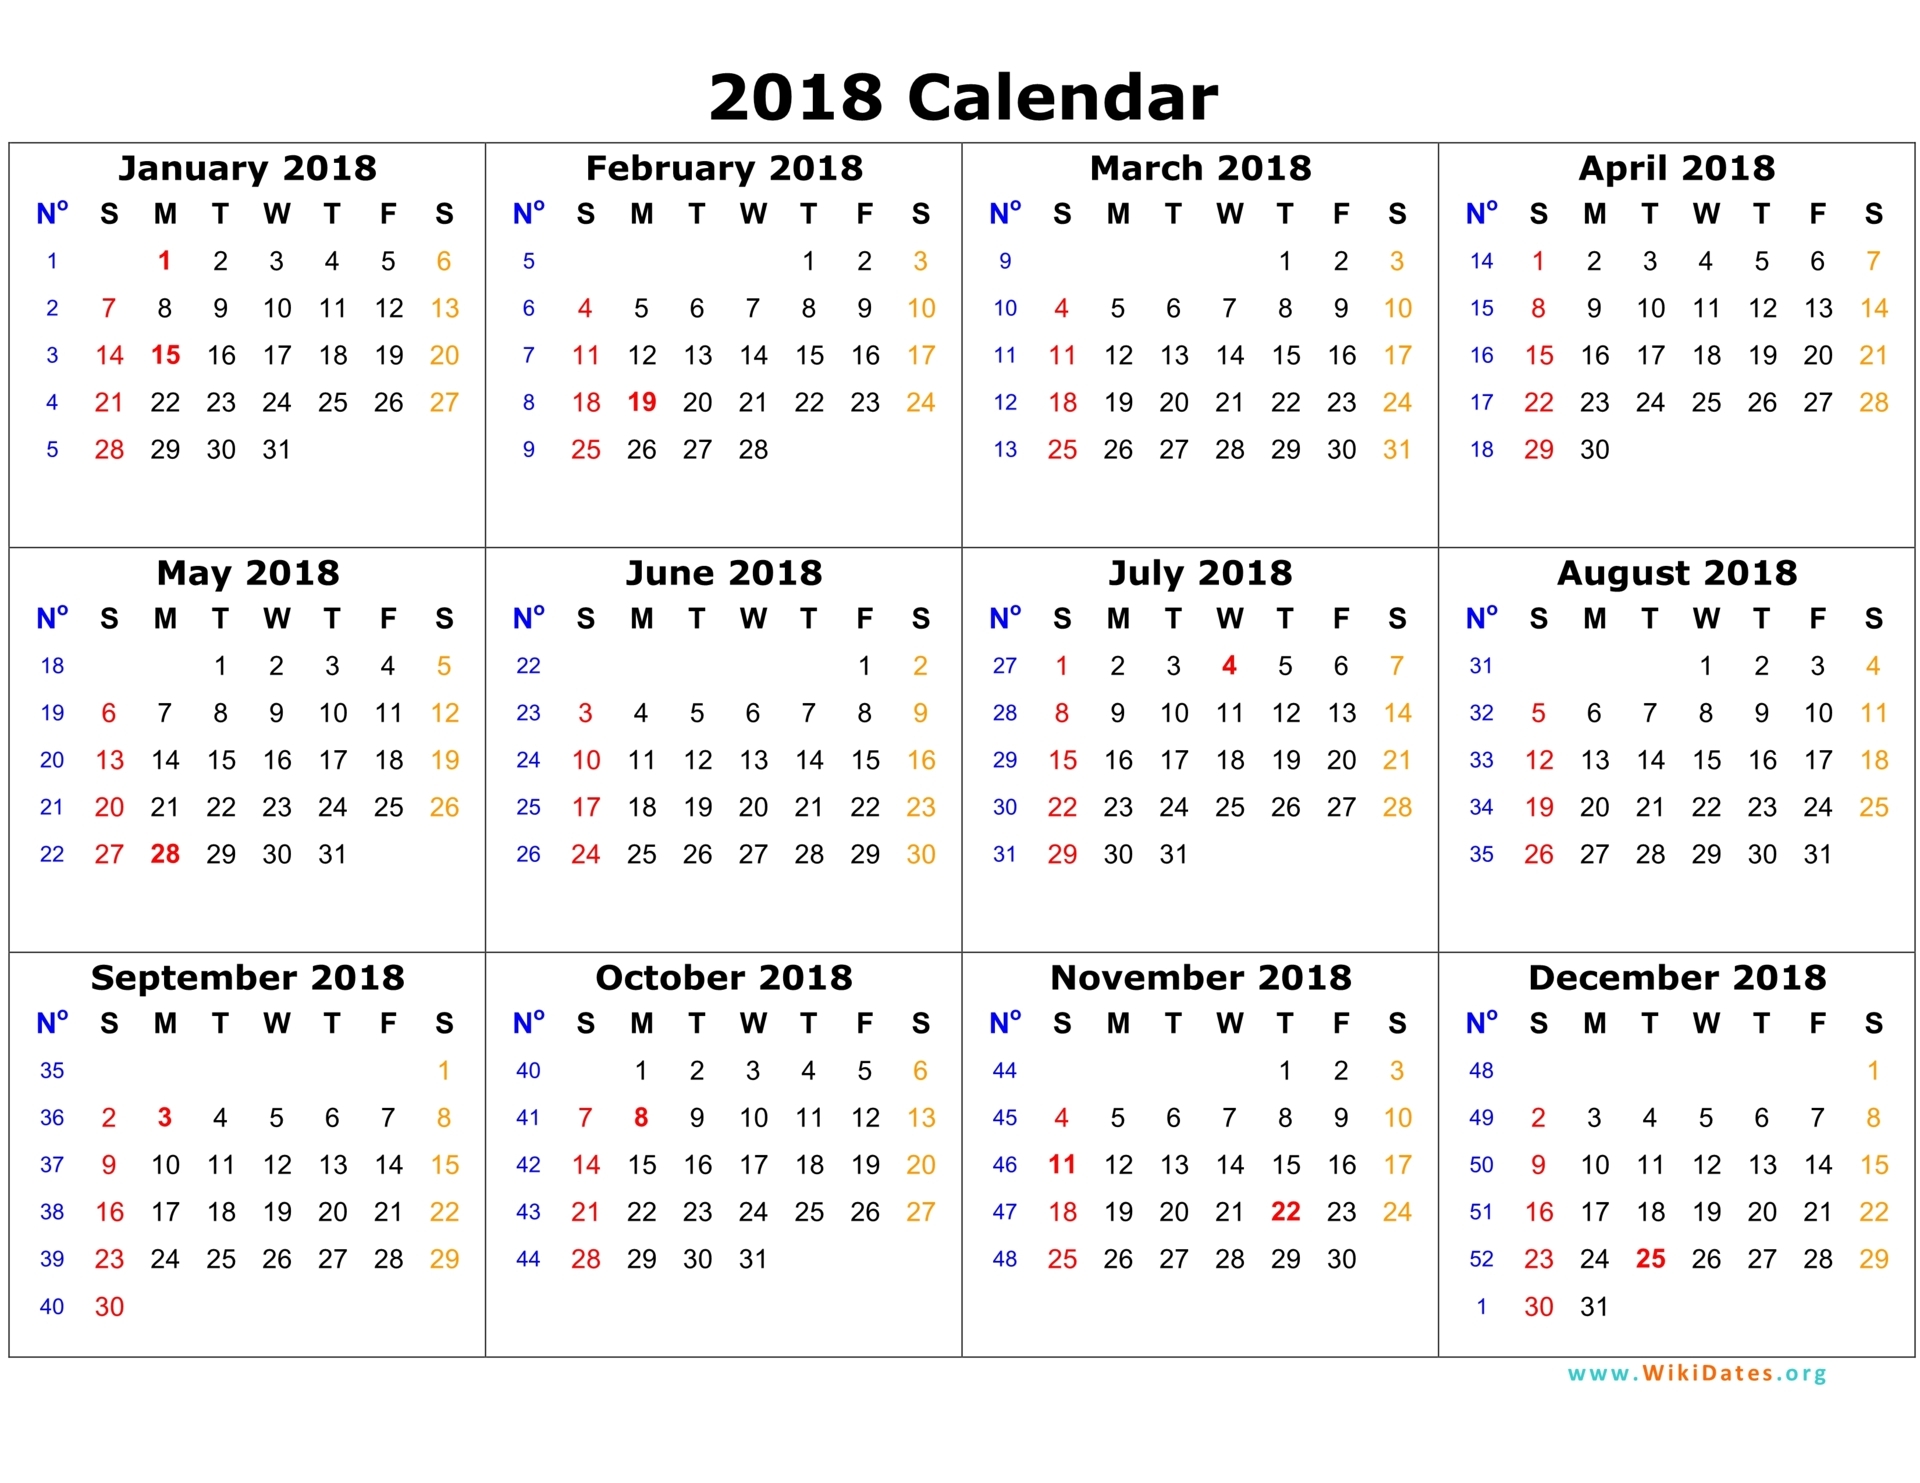 2018 Calendar WikiDatesorg